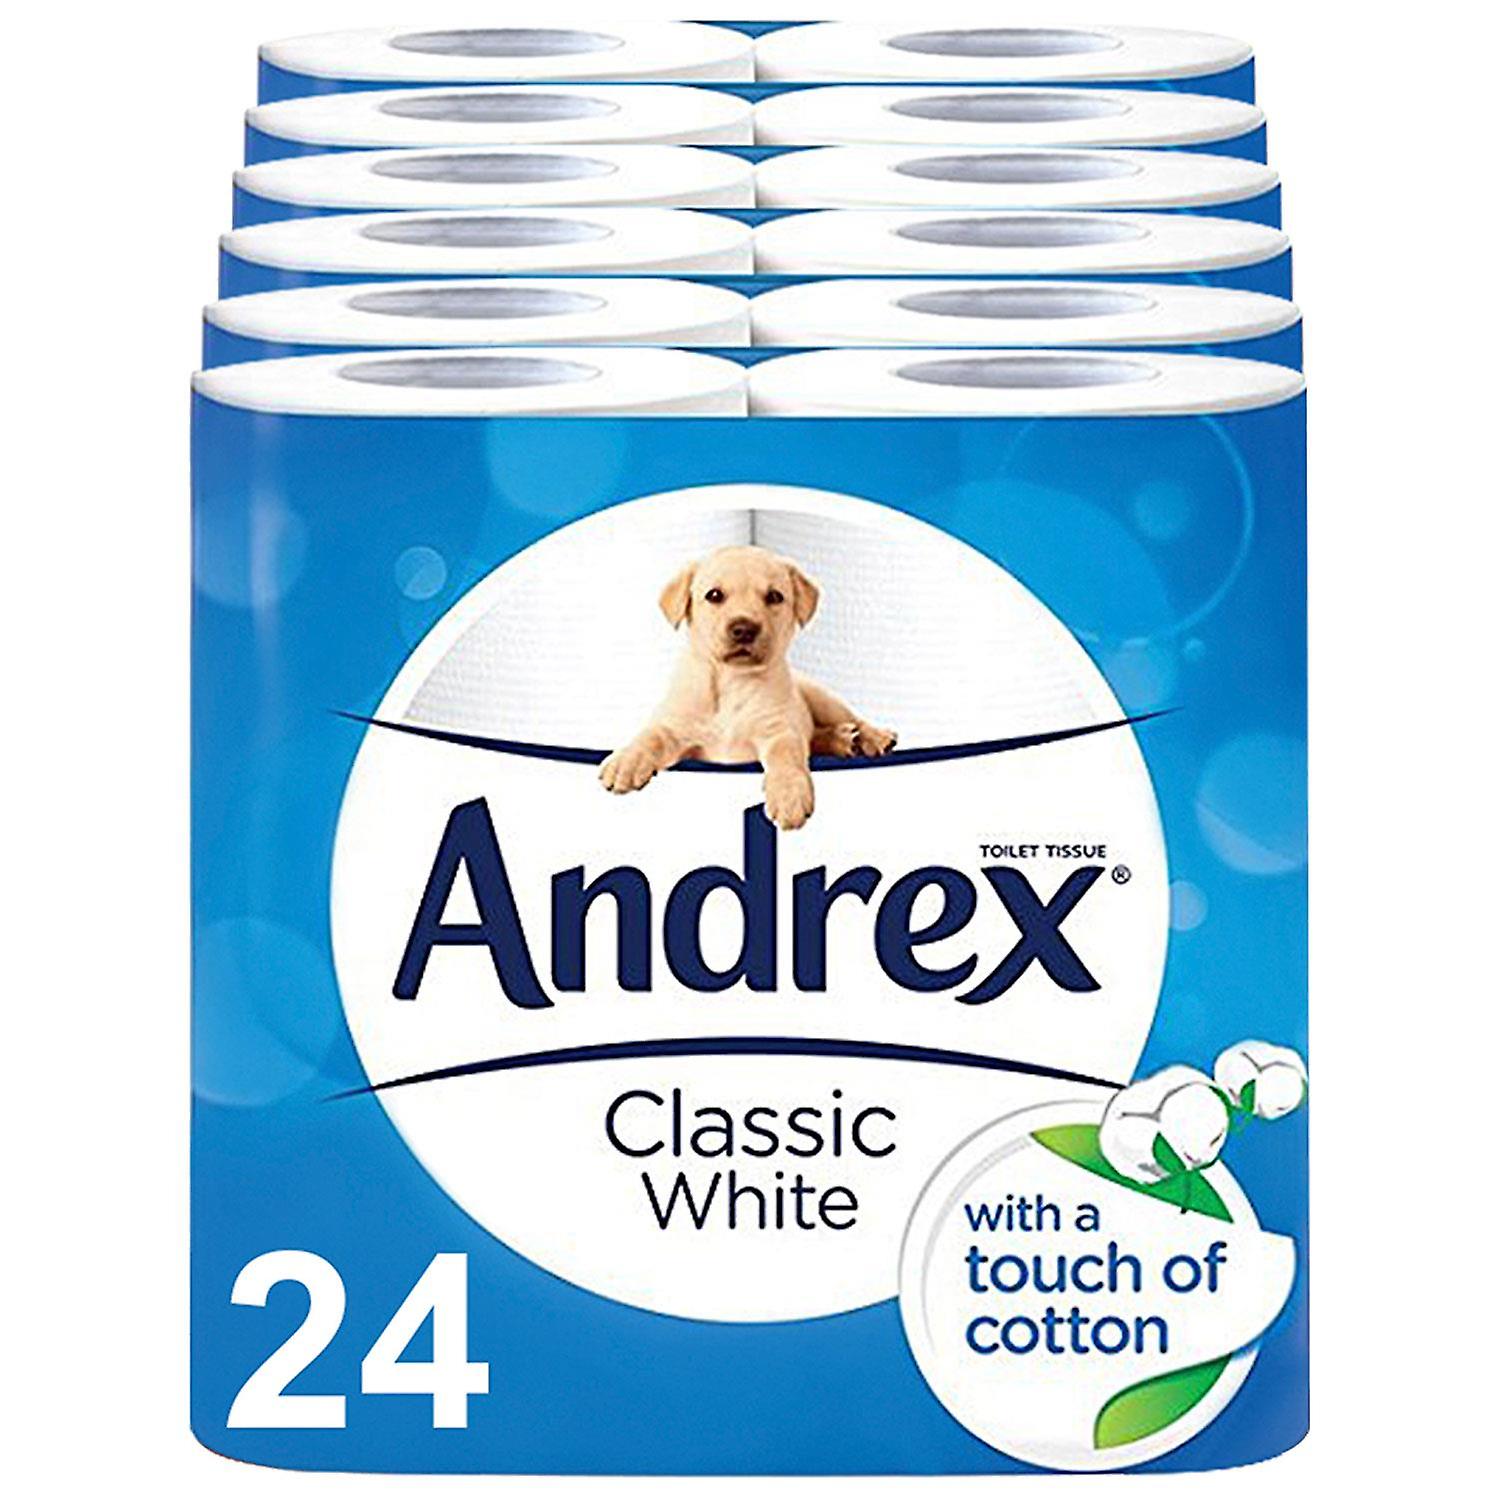 Andrex Classic White T/Tissue x24